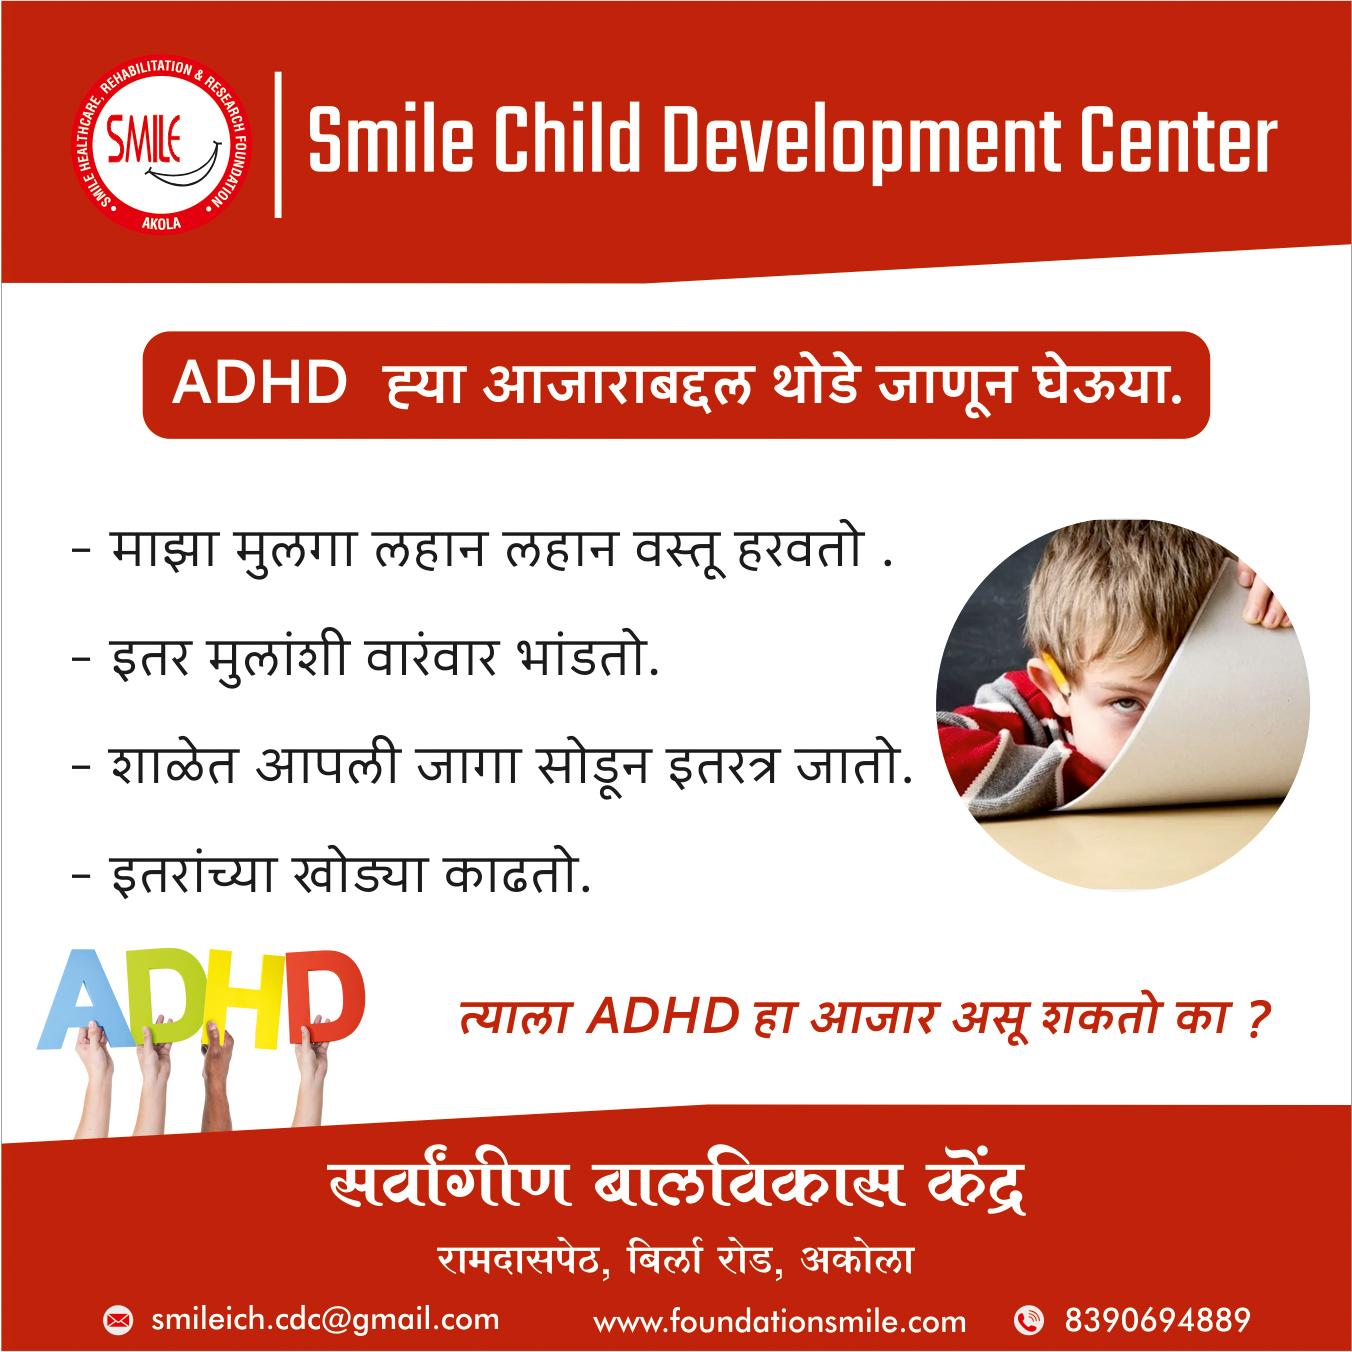 Smile Child Development Center